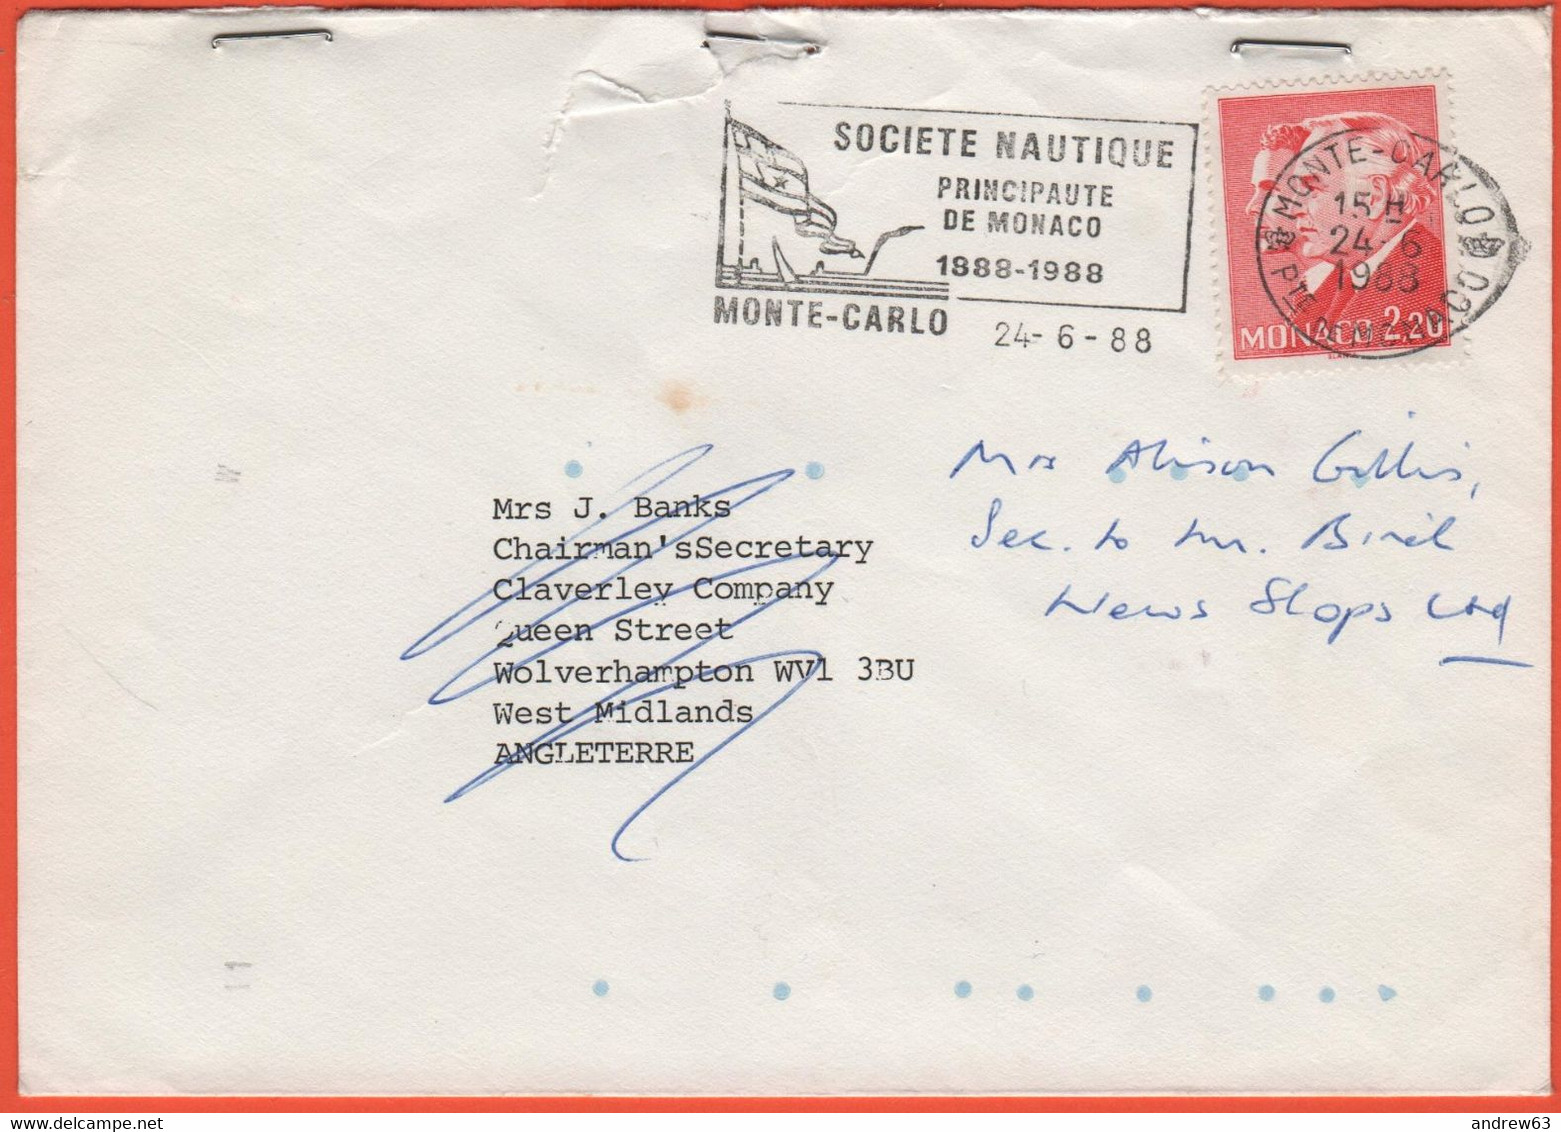 MONACO - 1988 + Flamme Société Nautique - 2,20 - Viaggiata Da Monte Carlo Per Wolverhampton, England - Lettres & Documents